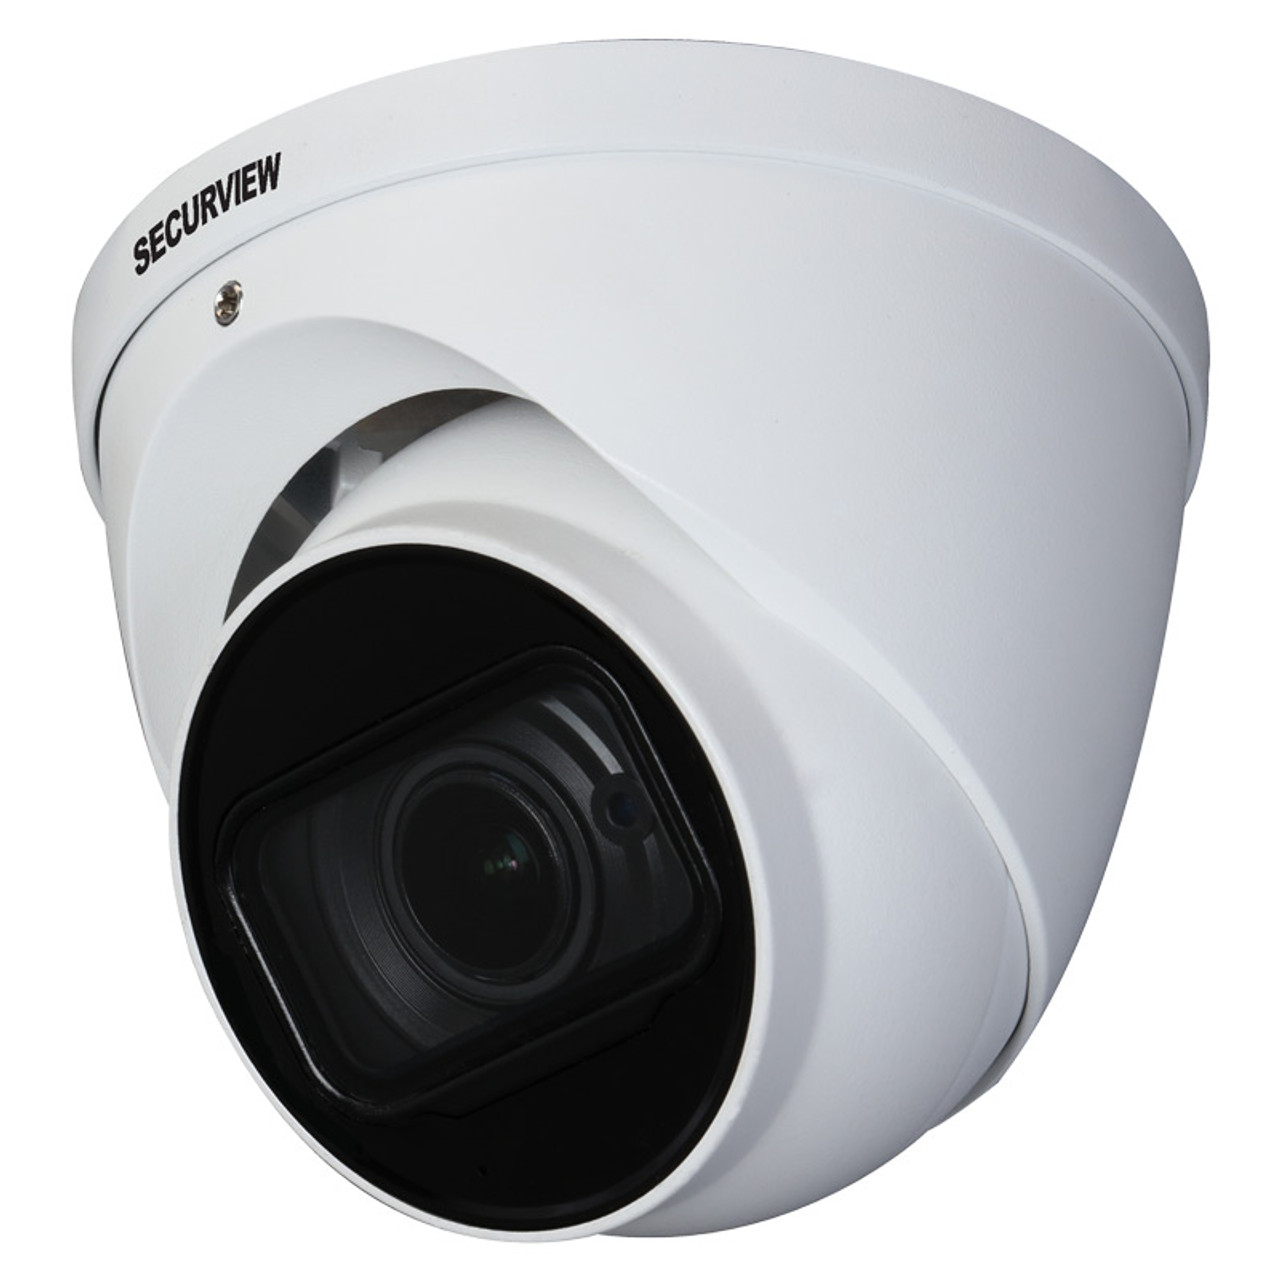 WatchGuard Compact 8 x 8MP Motorised Outdoor HDCVI Dome Cameras with 4TB AI DVR Surveillance Kit